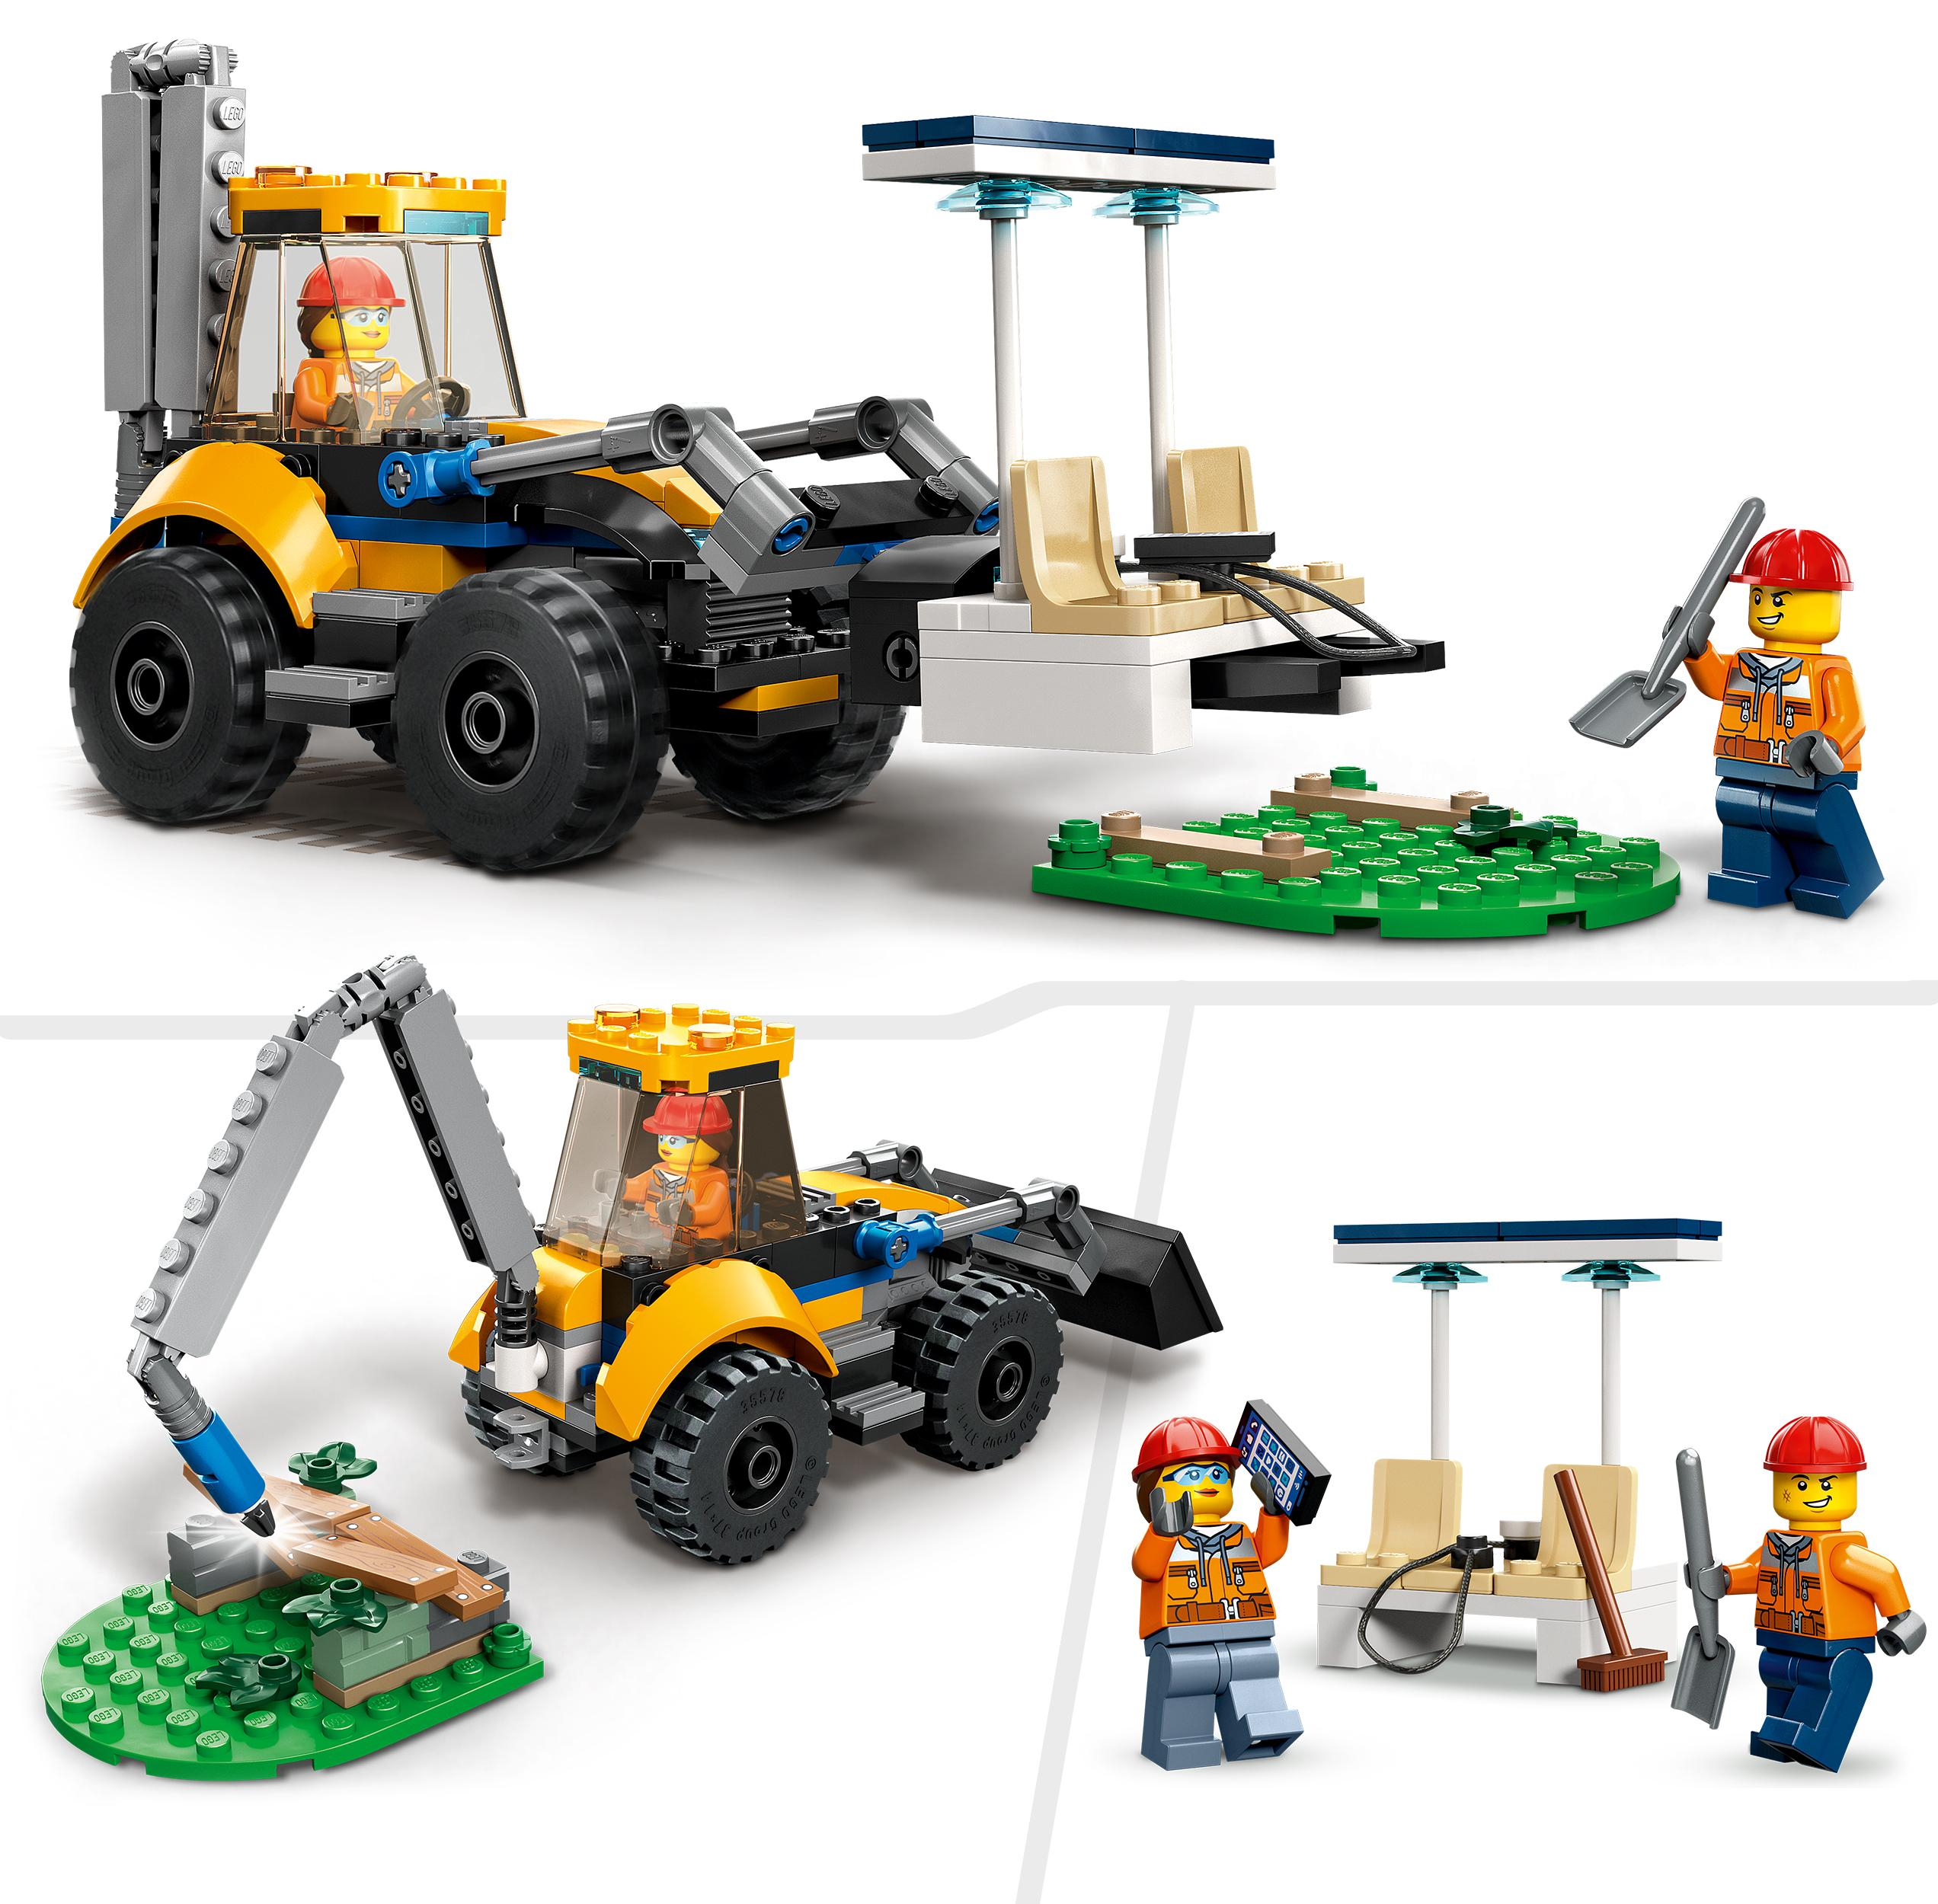 LEGO City 60385 Radlader Bausatz, Mehrfarbig